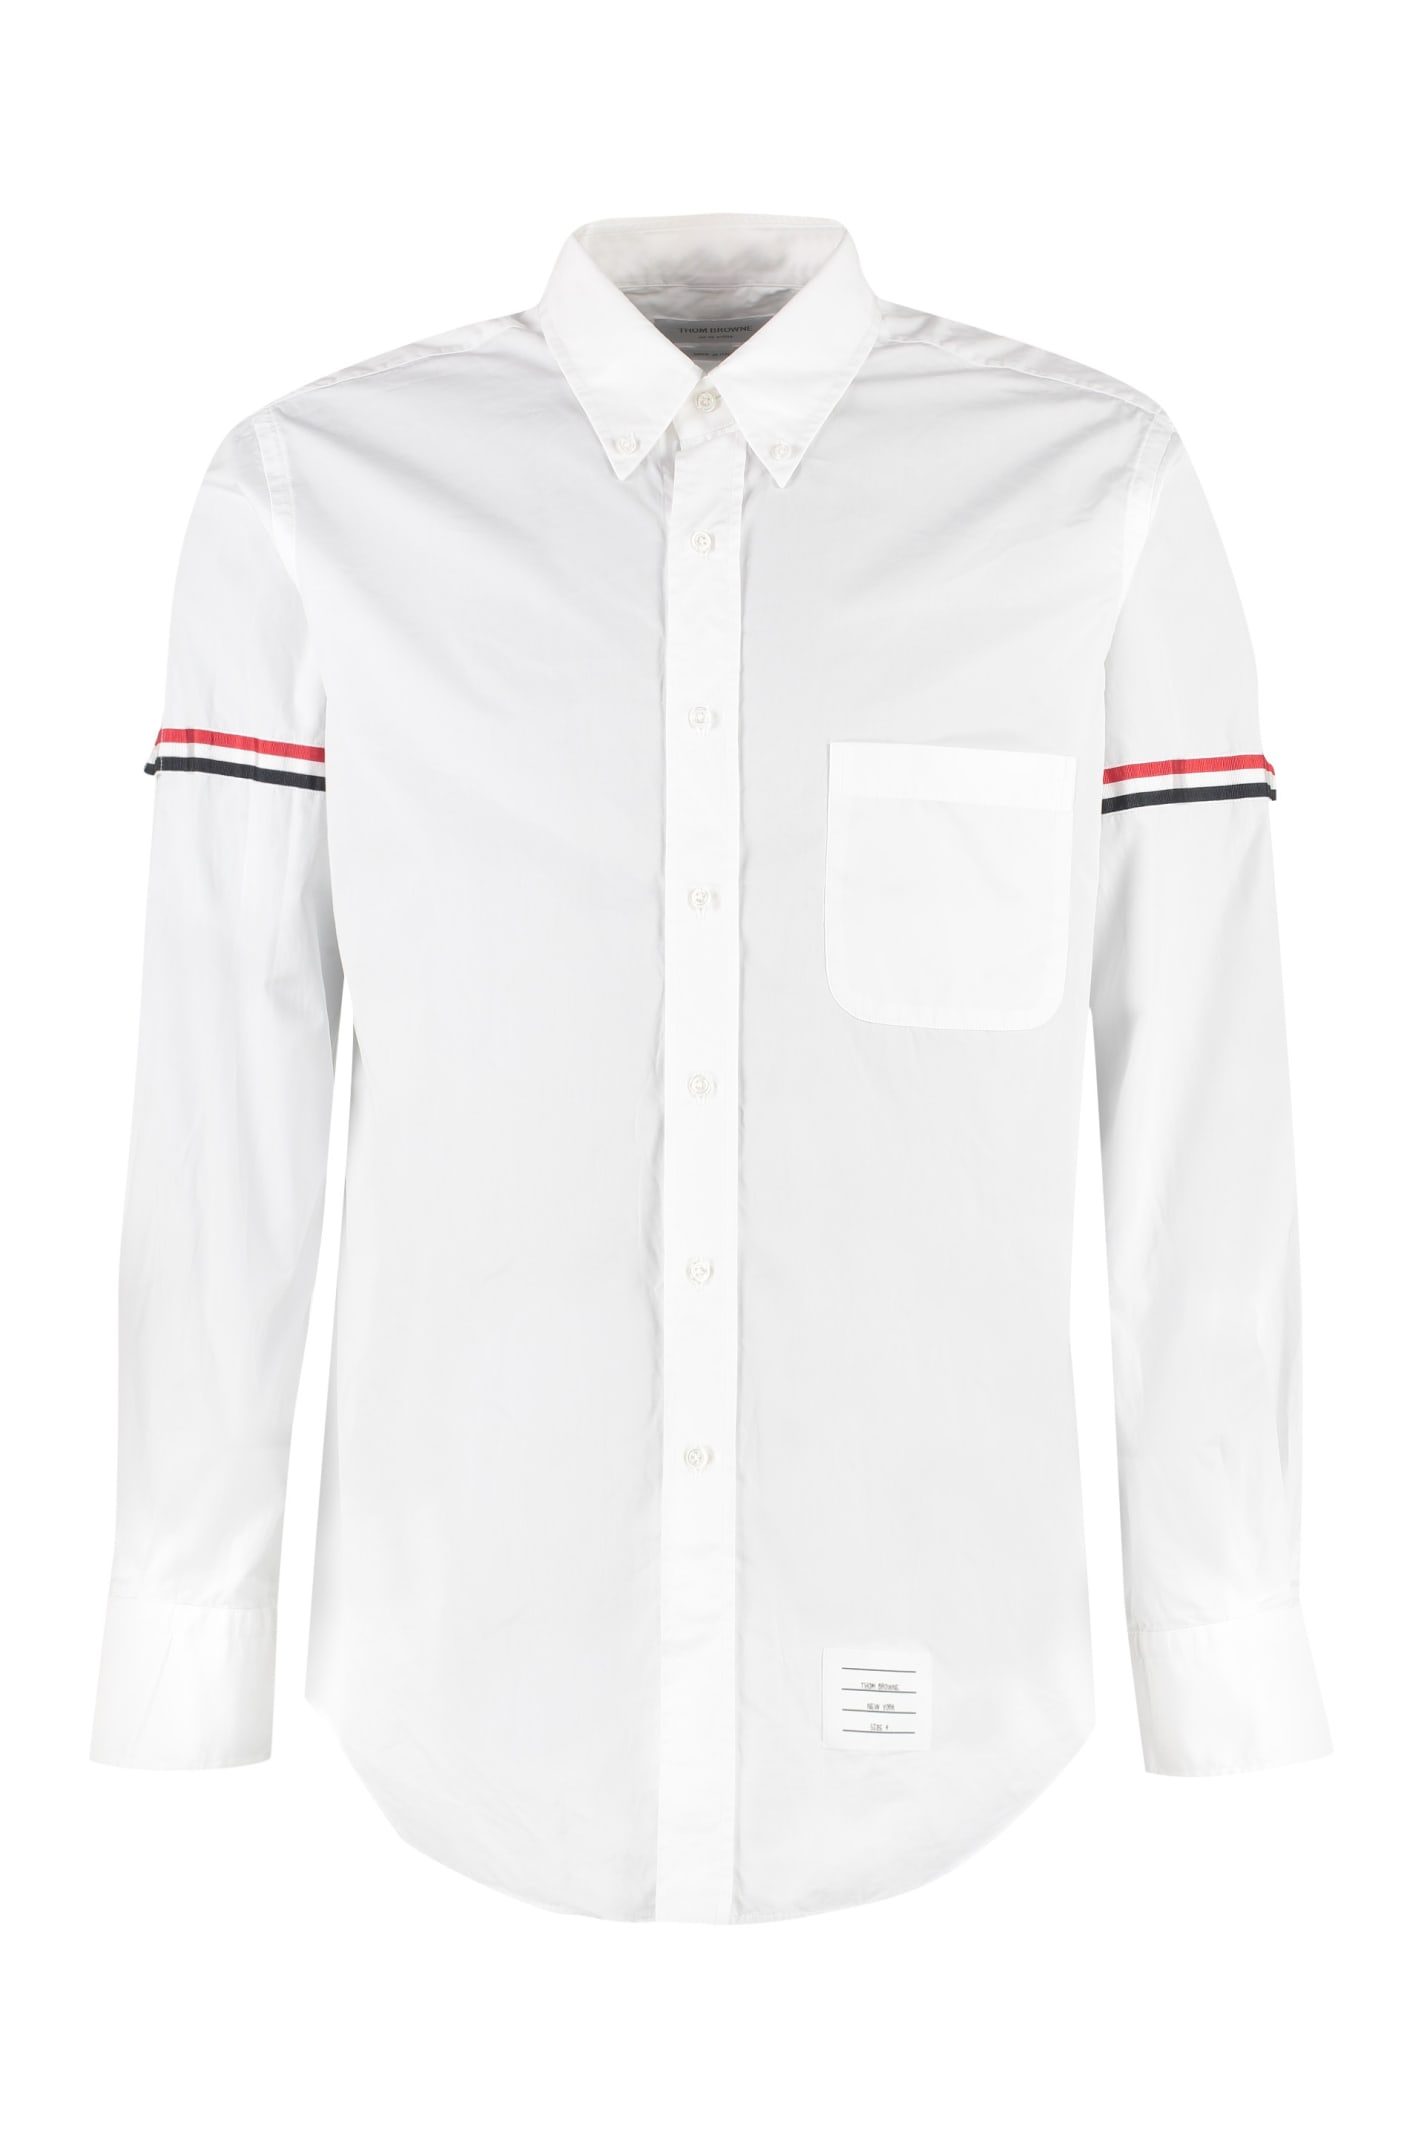 Thom Browne Classic Italian Collar Cotton Shirt